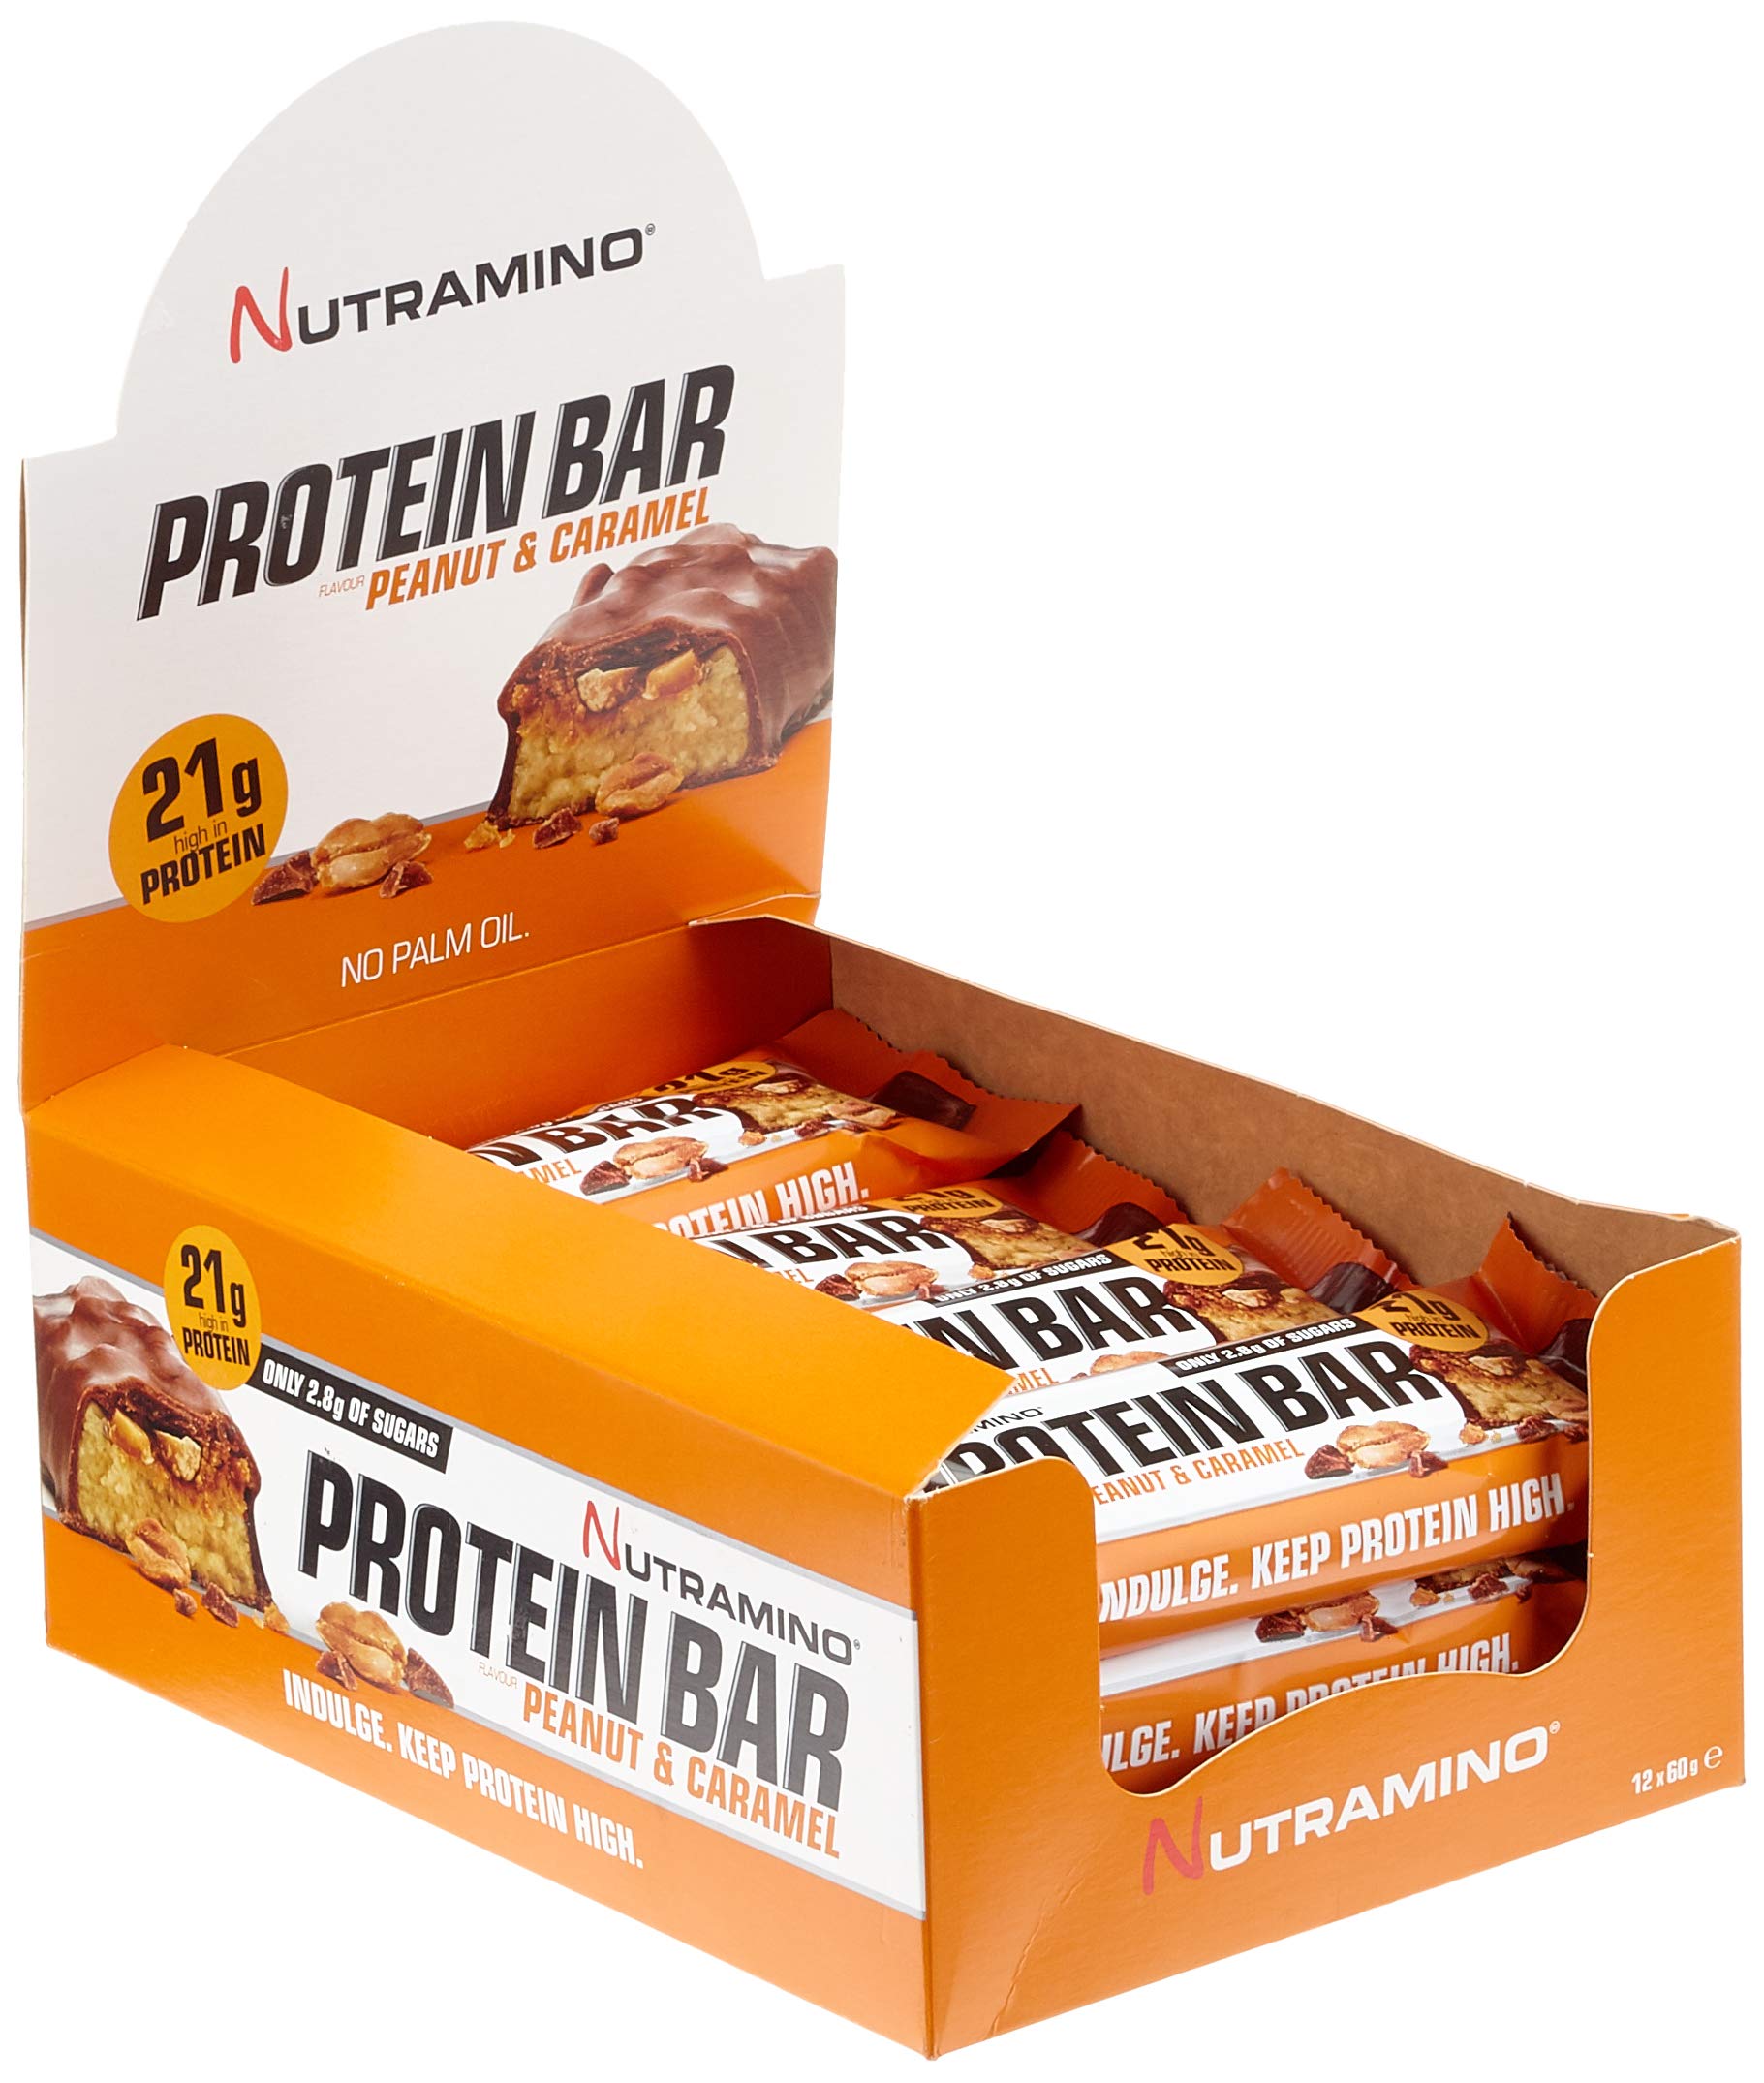 Nutramino Protein bar/Eiweiß Riegel (21g Eiweiß) Chunky Peanut und Caramel EiweißRiegel, 1er Pack (12 x 60g)